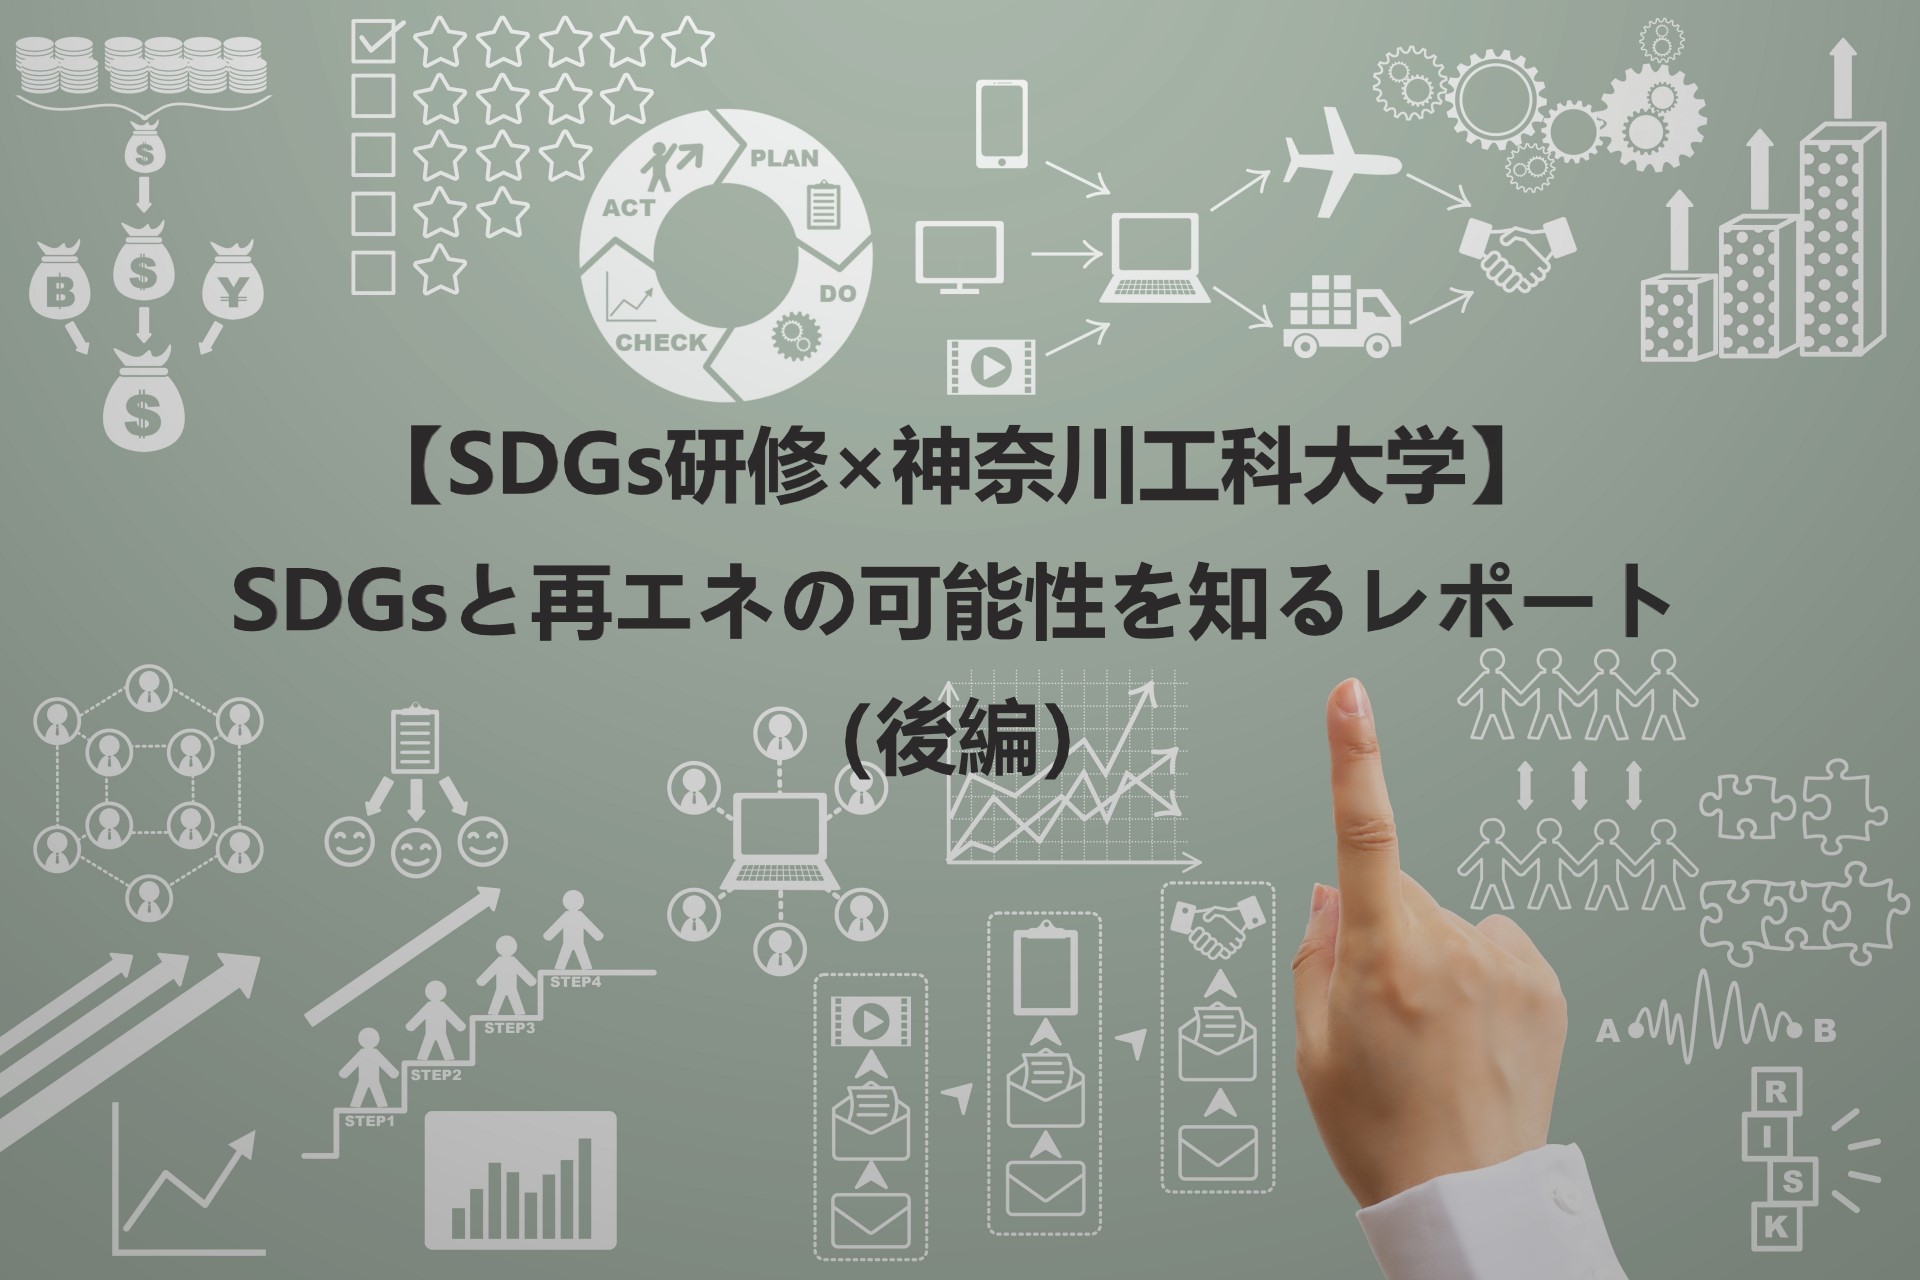 SDGs研修×神奈川工科大学レポート(後編)